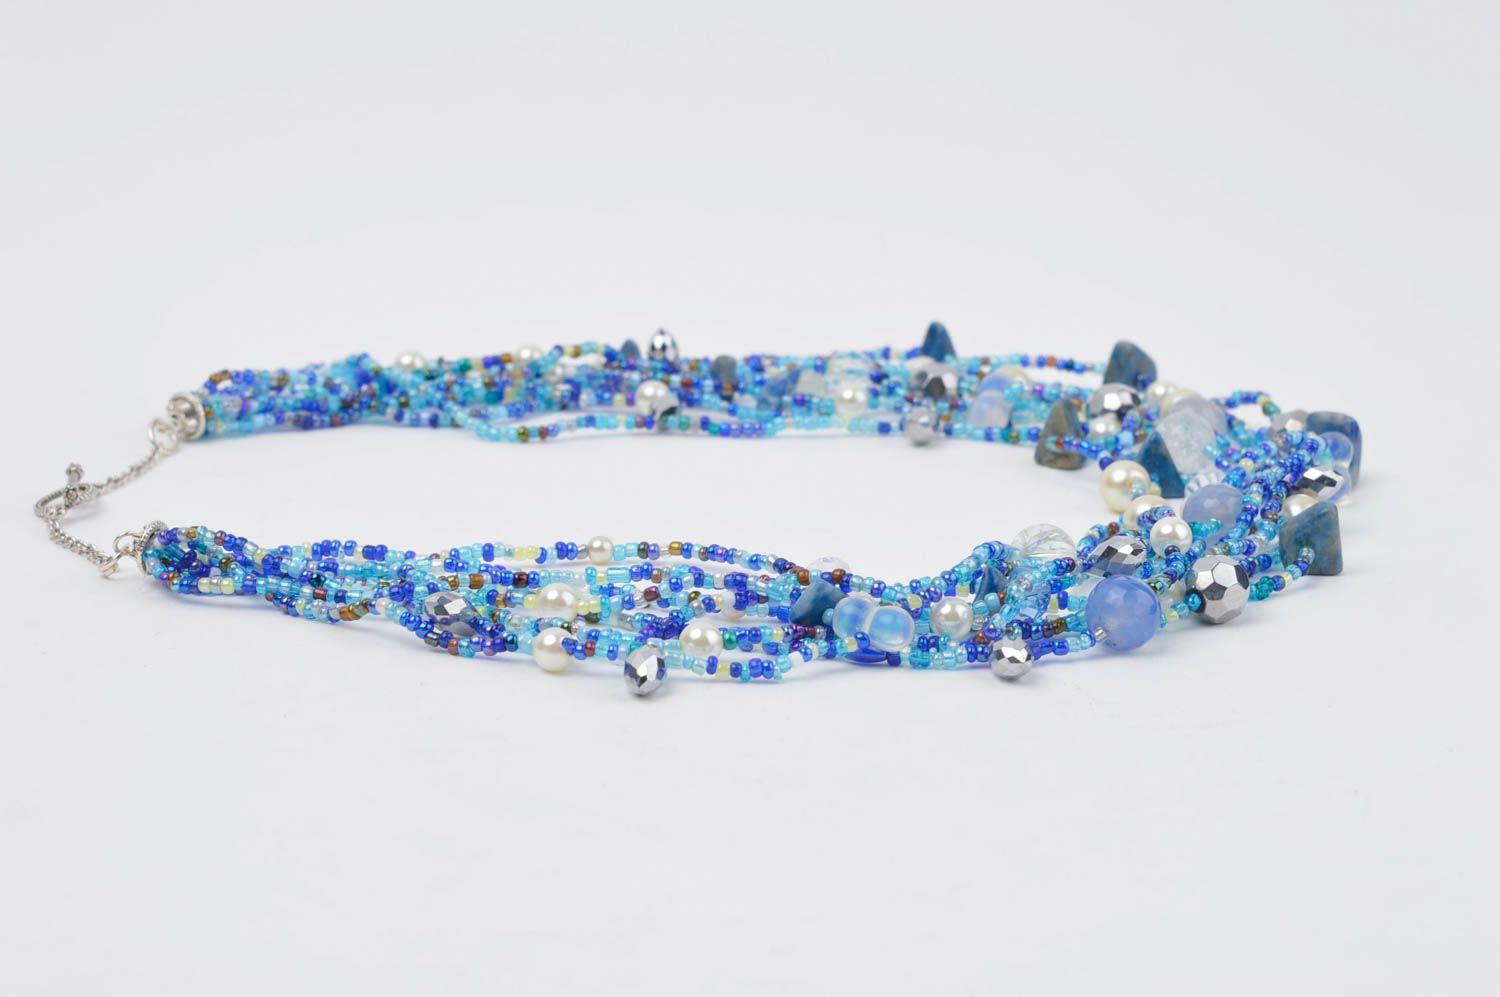 Handmade necklace beaded necklace designer accessory unusual jewelry gift ideas photo 2